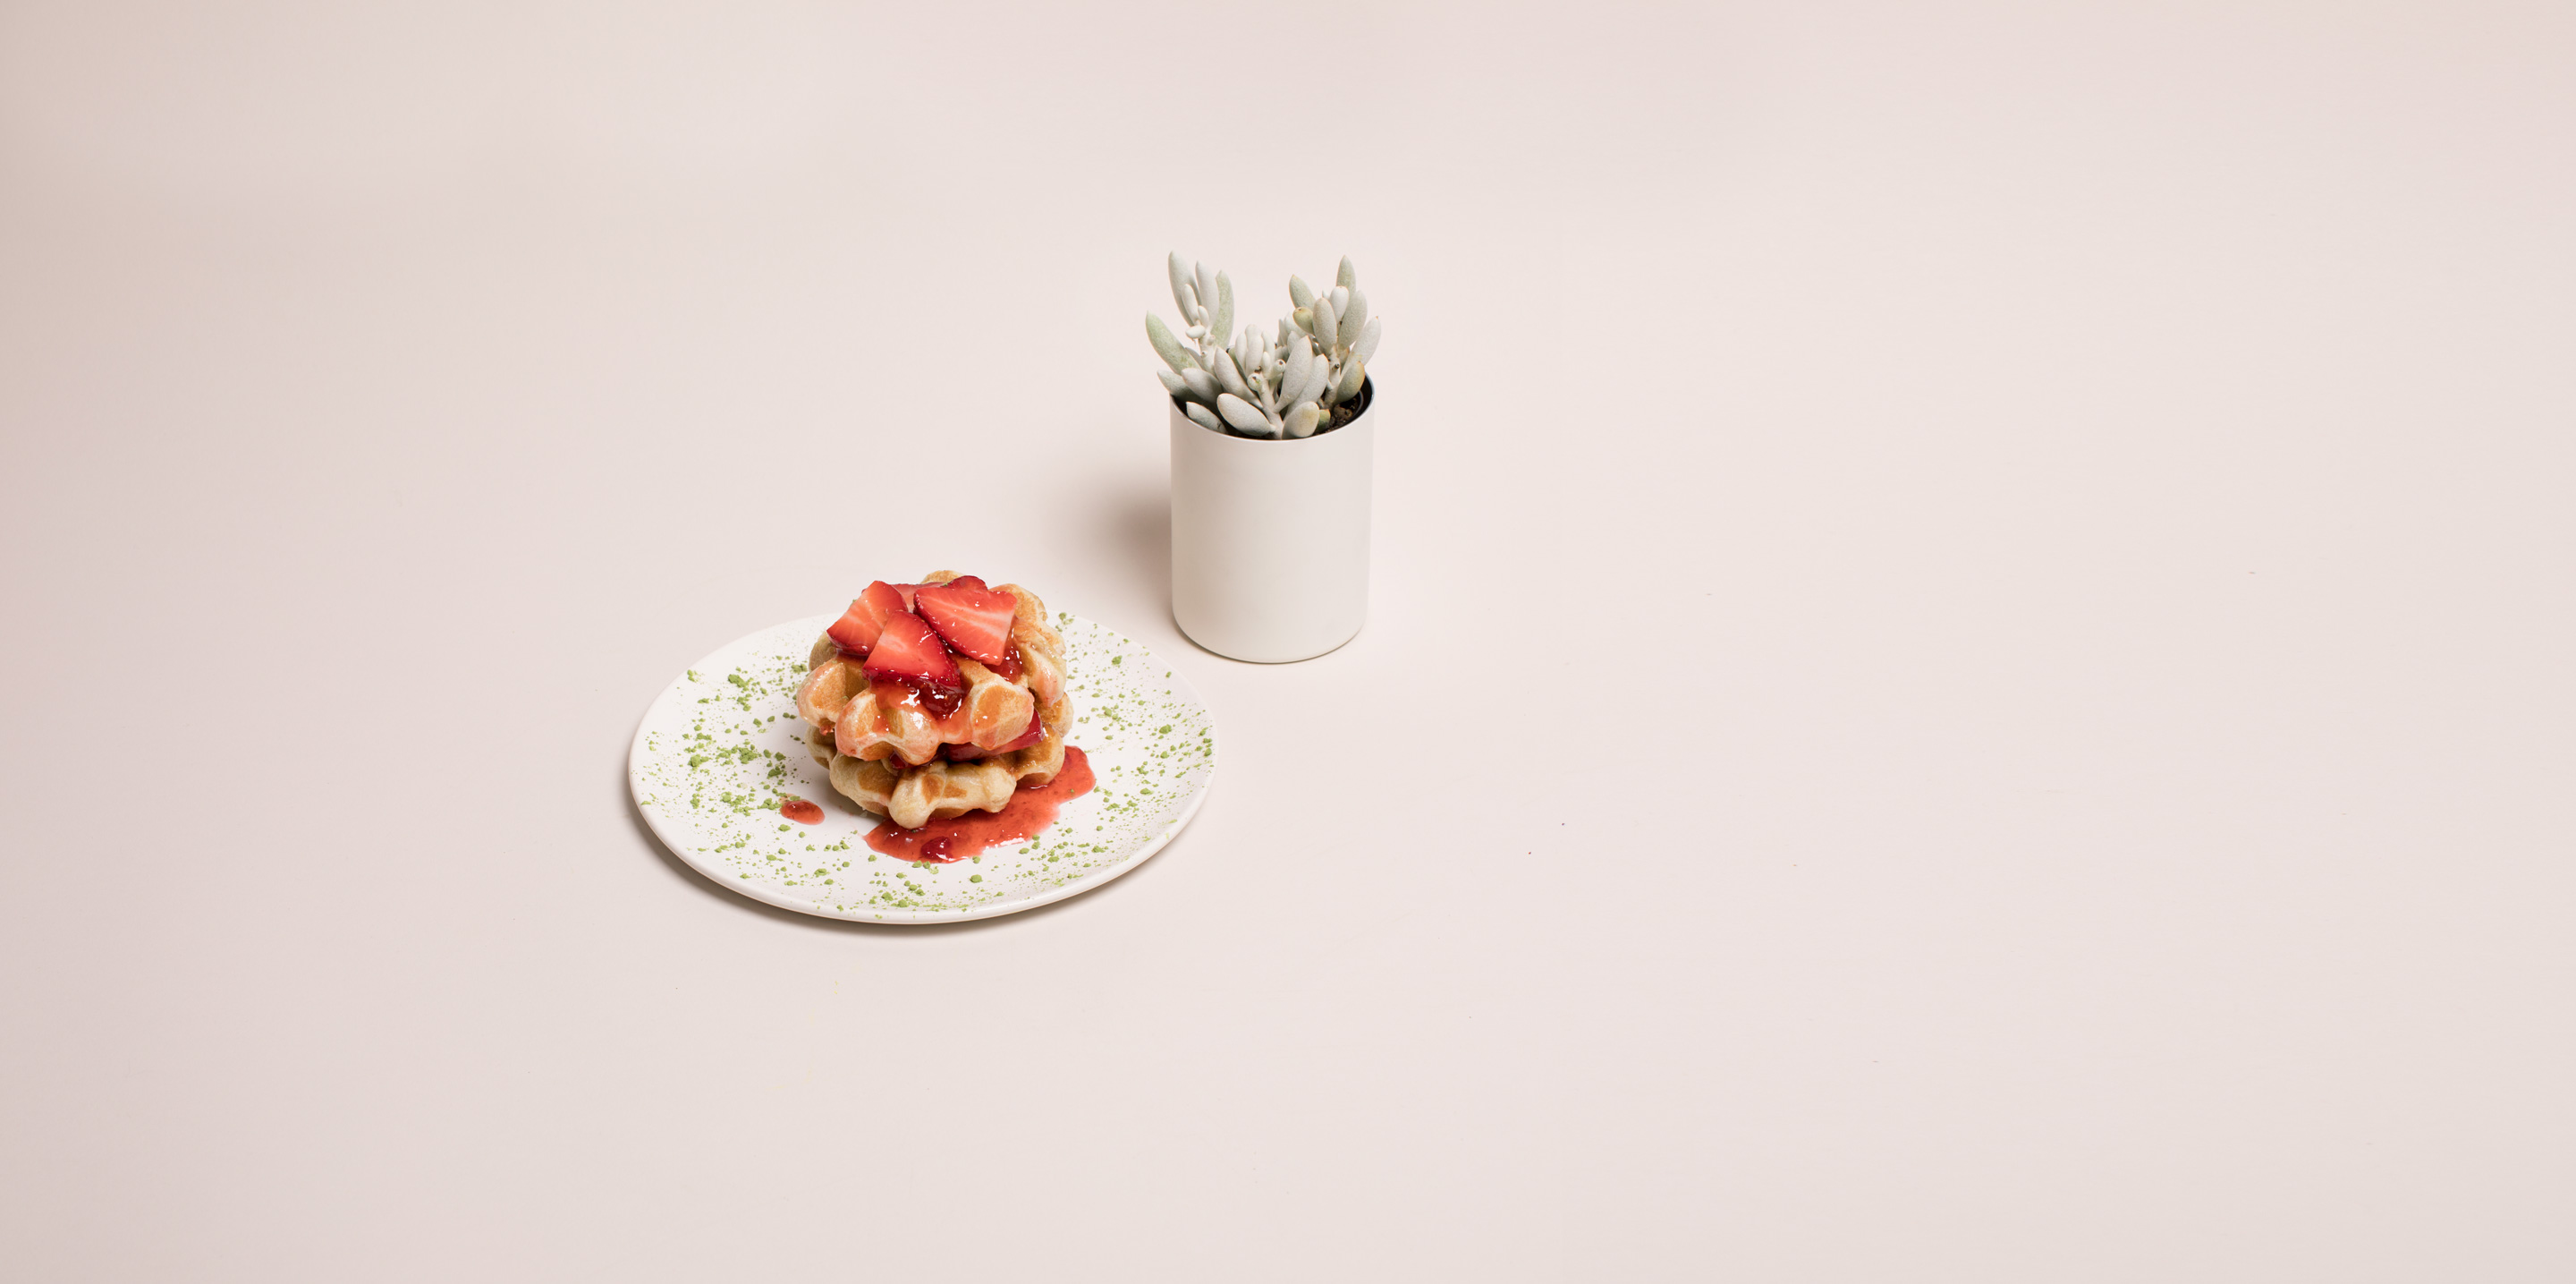 Cricket-flour waffle with kombucha strawberry compote and moringa powder